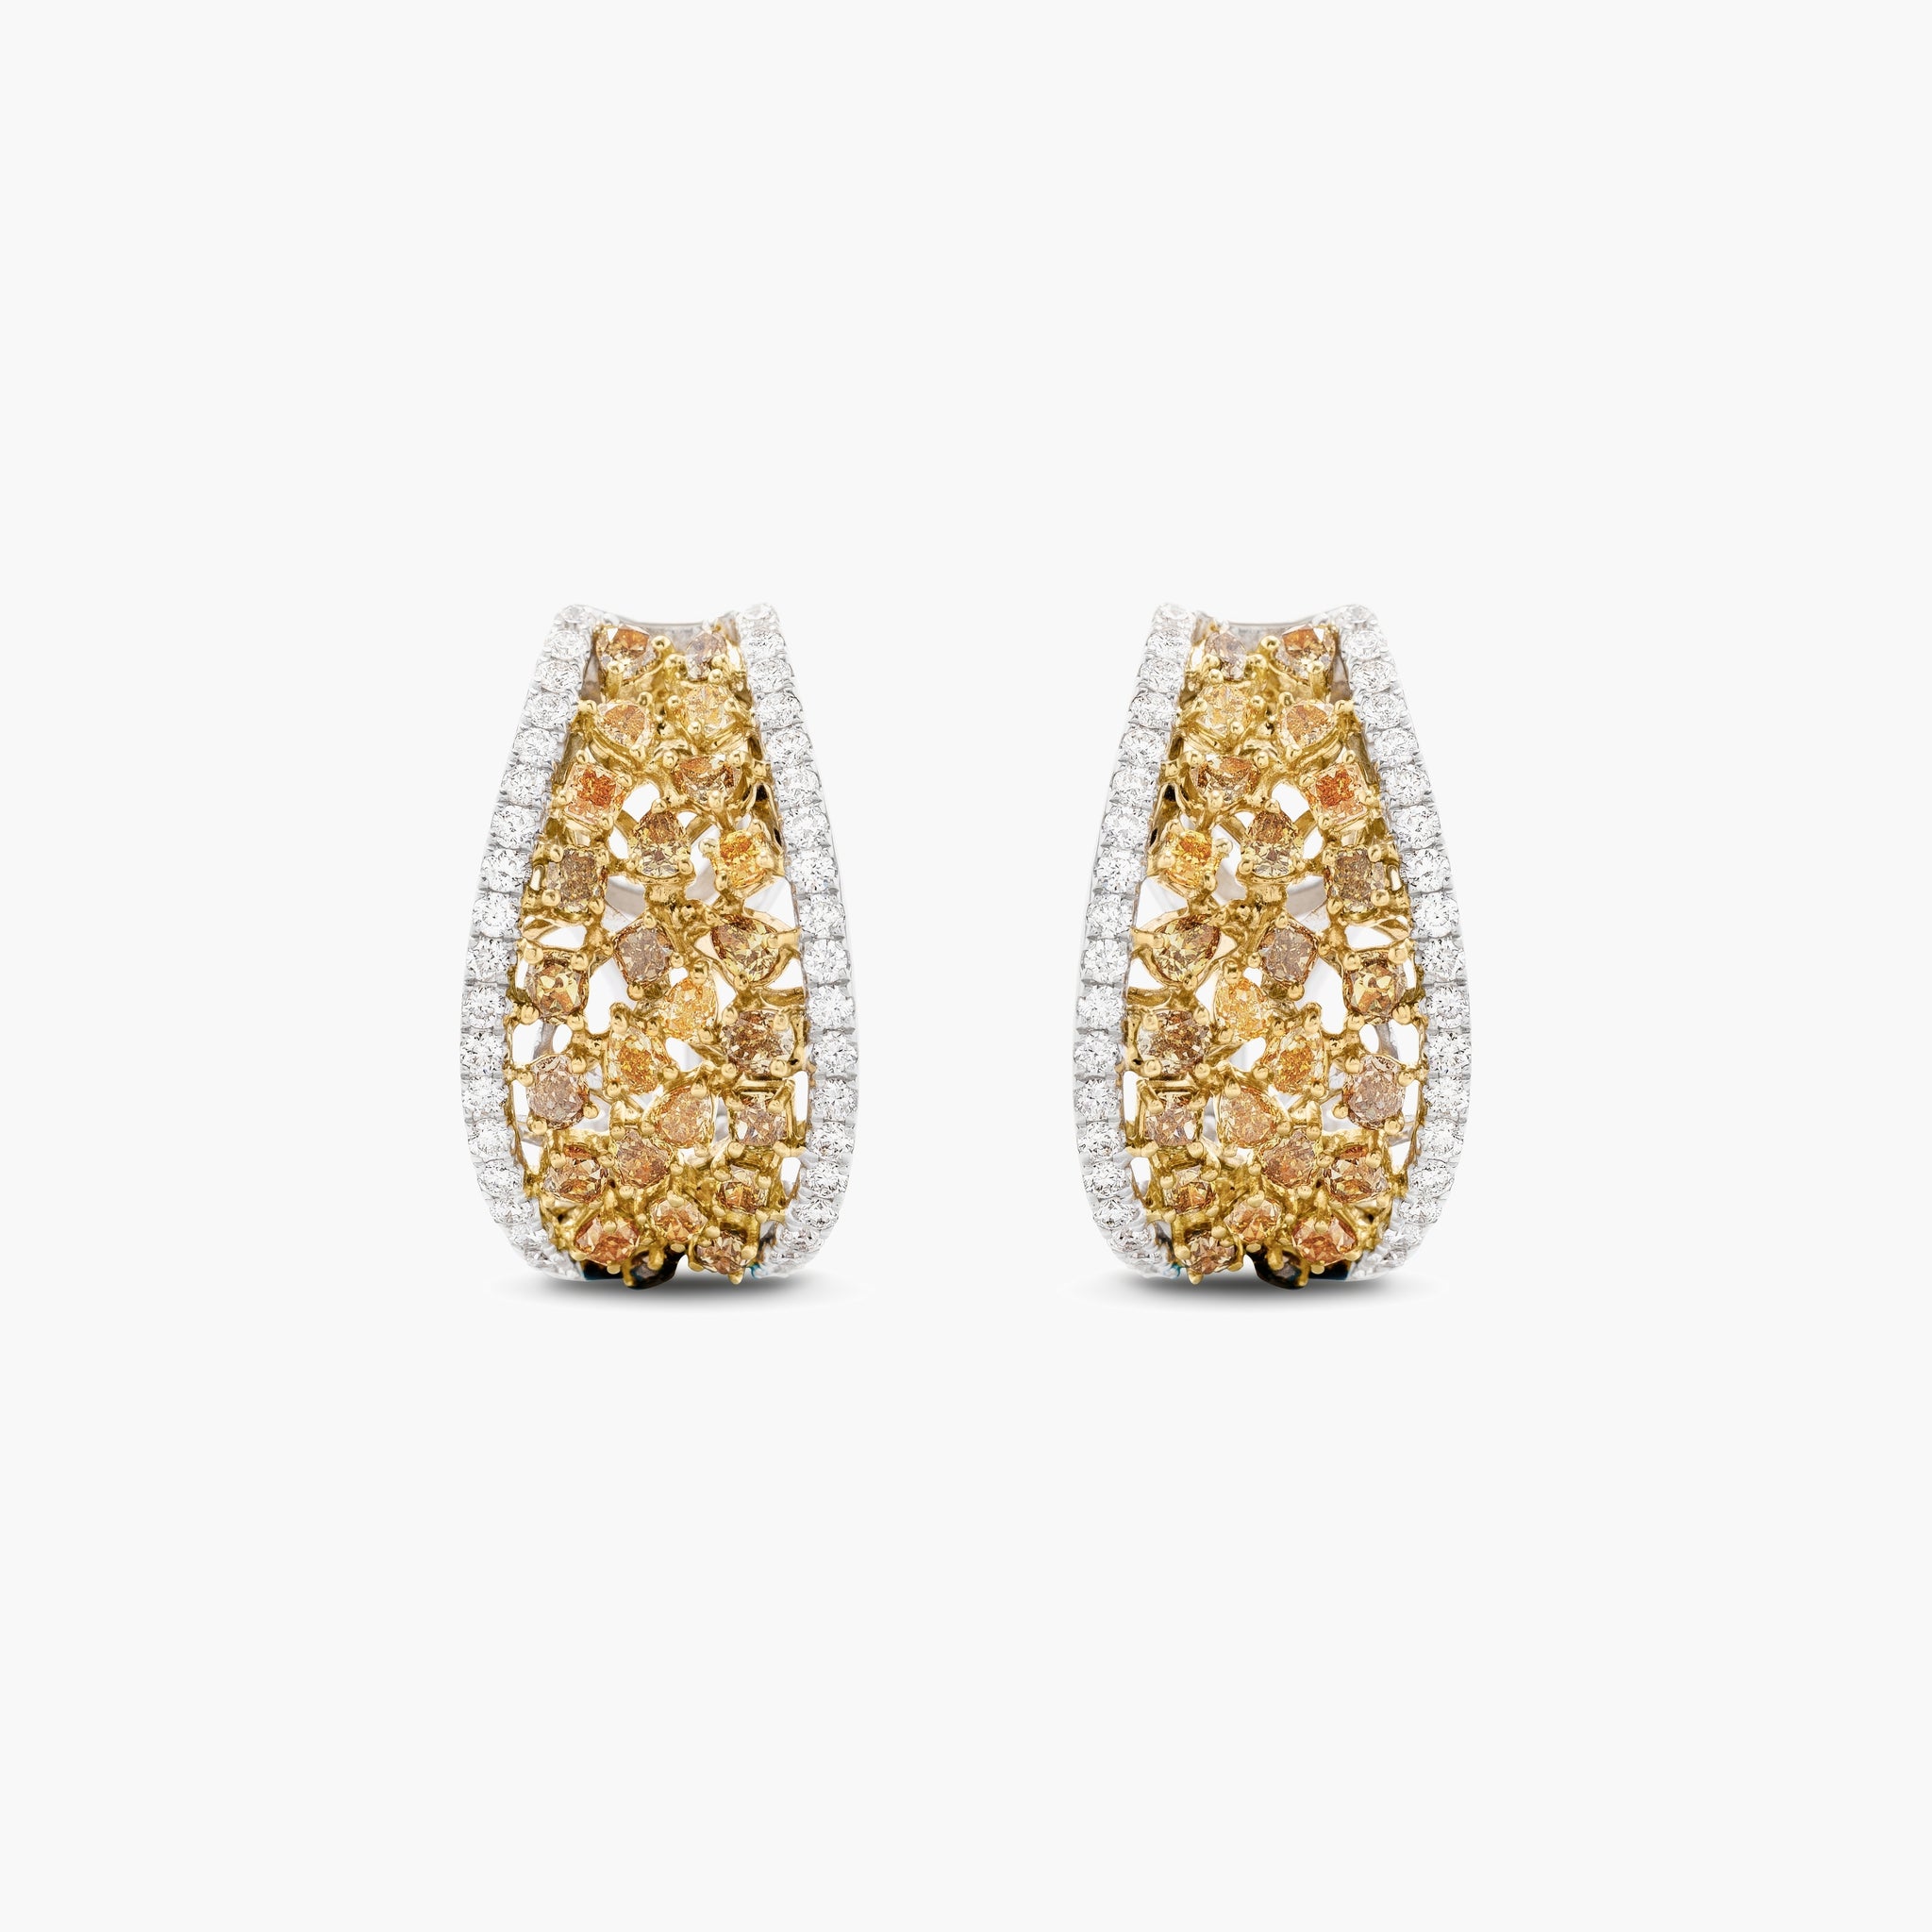 Canary Yellow Diamond Earrings